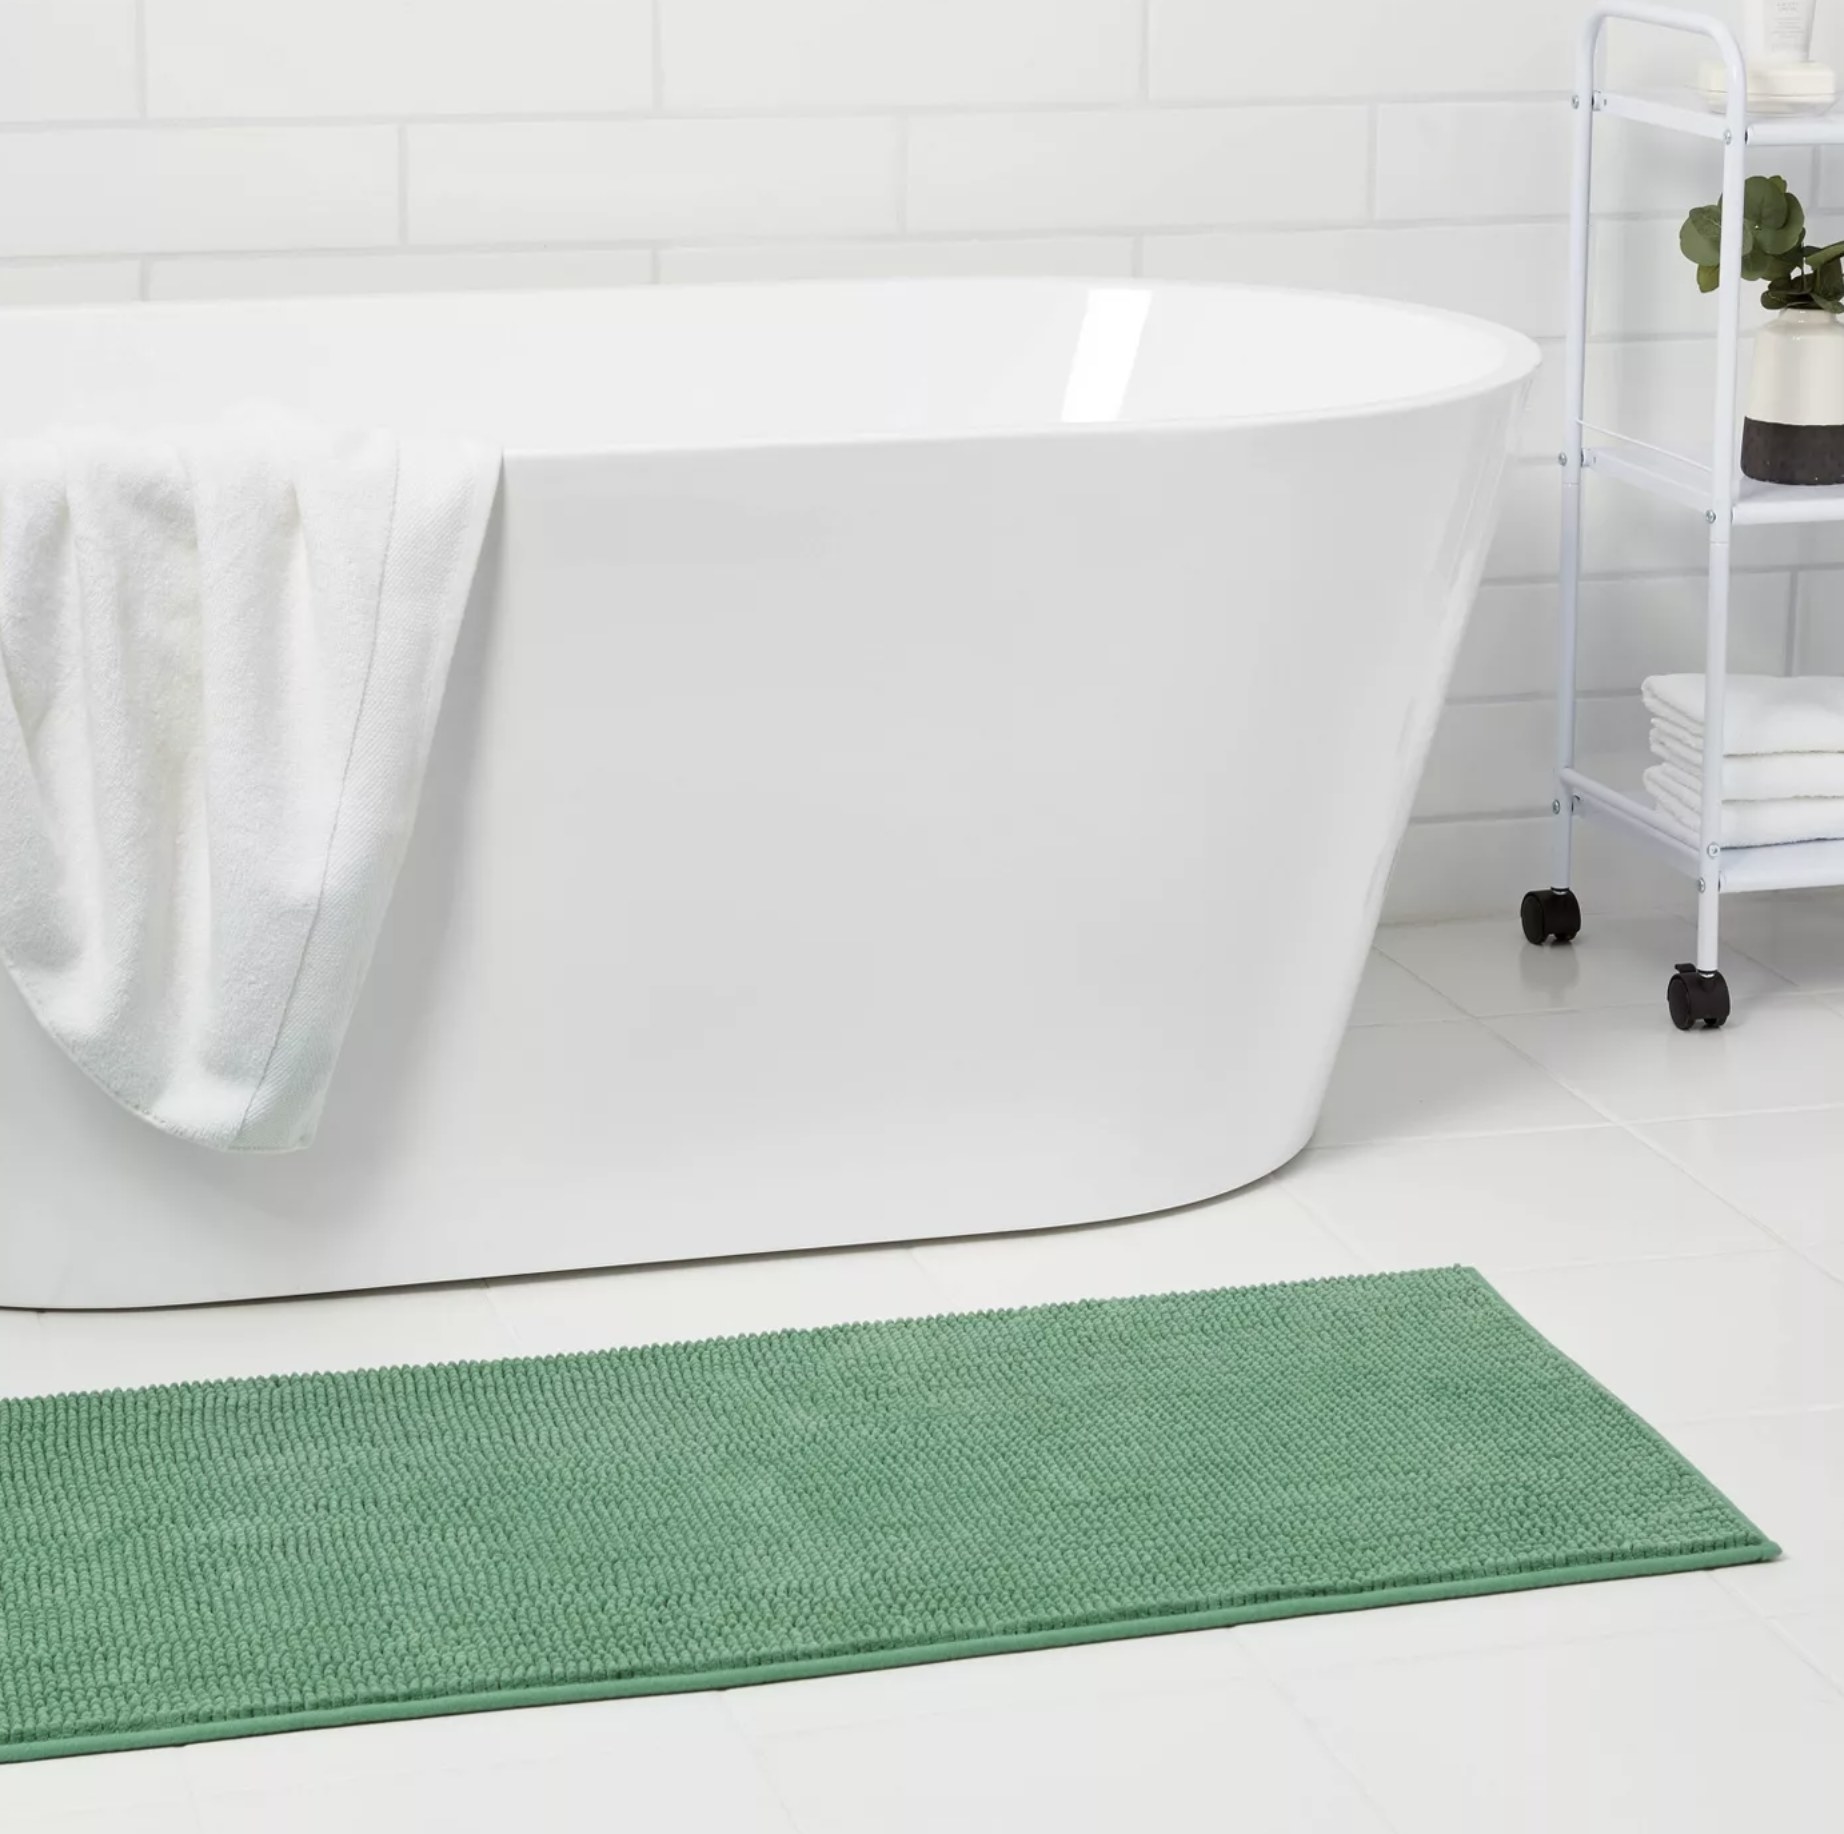 The green chenille bath mat